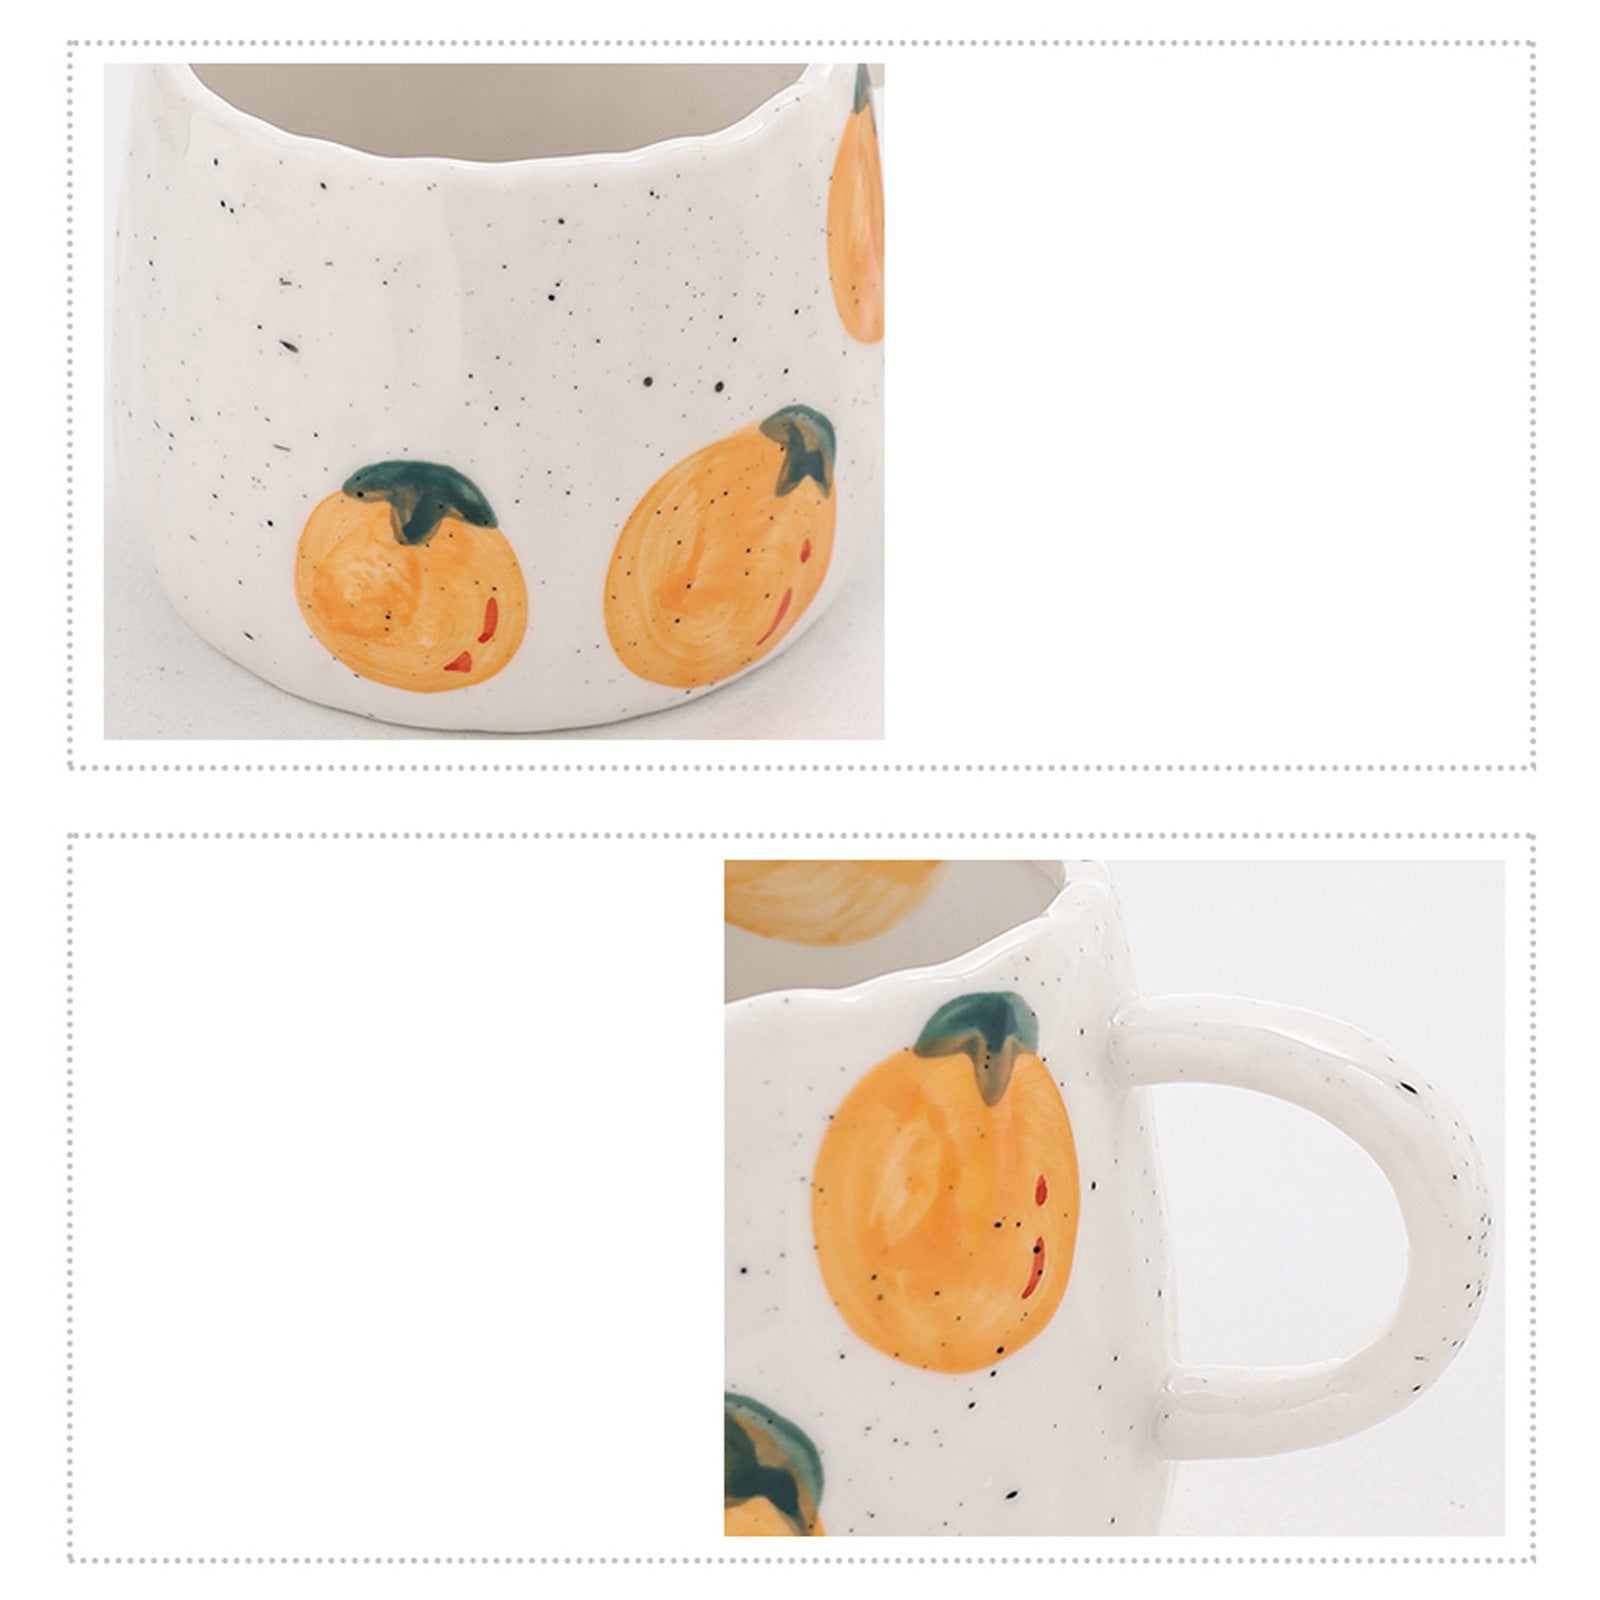 Beautiful Retro Fruit Mugs With Hand-Kneaded Look